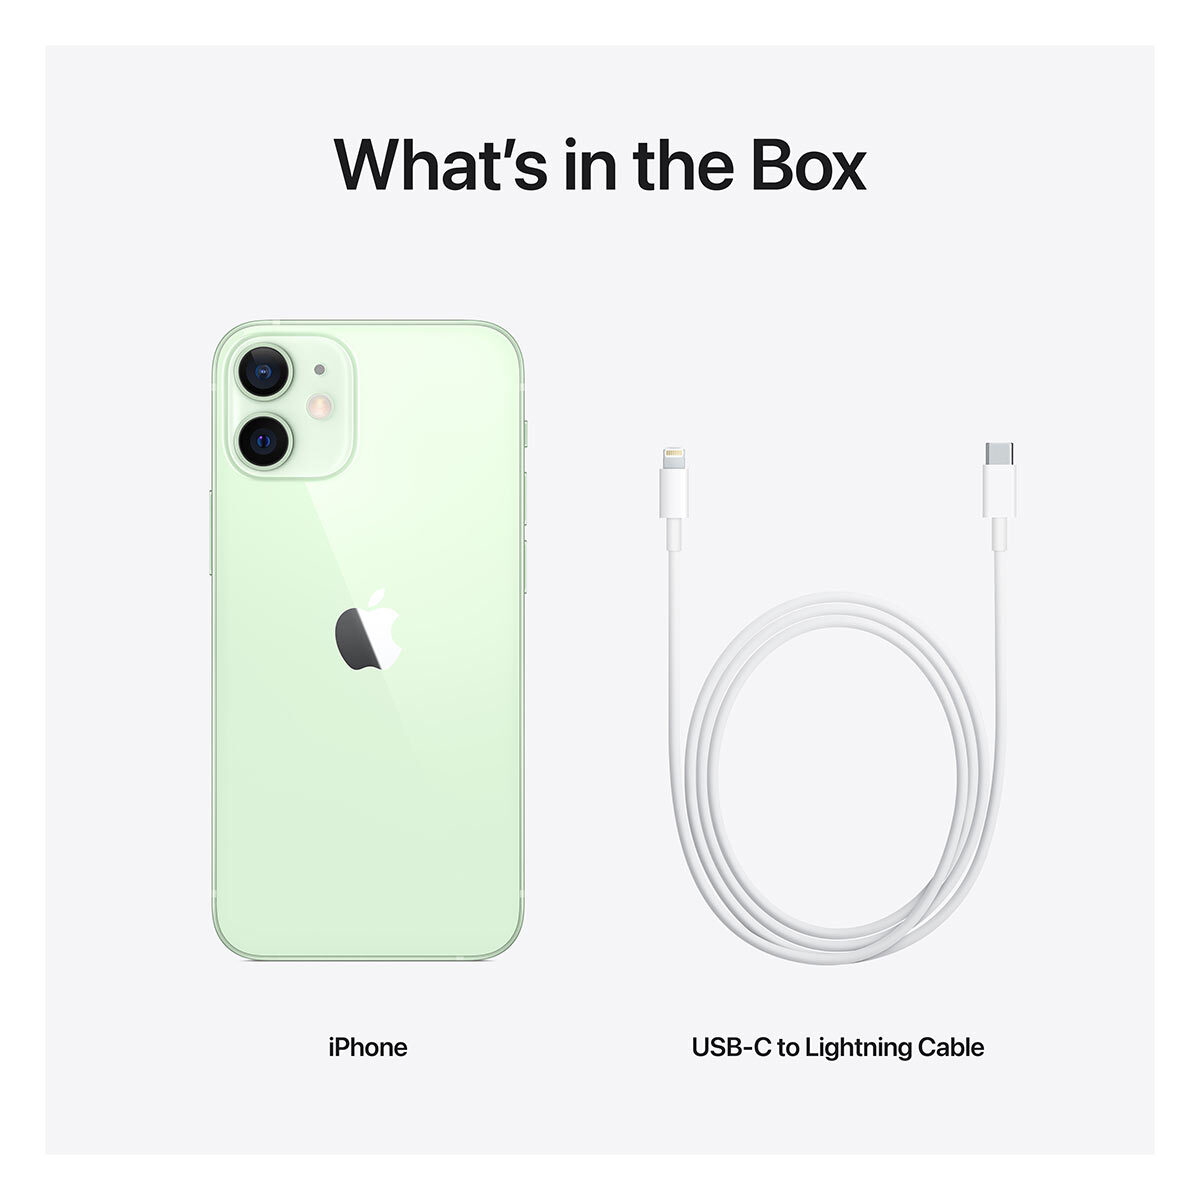 Buy Apple iPhone 12 mini 64GB Sim Free Mobile Phone in Green, MGE23B/A at costco.co.uk